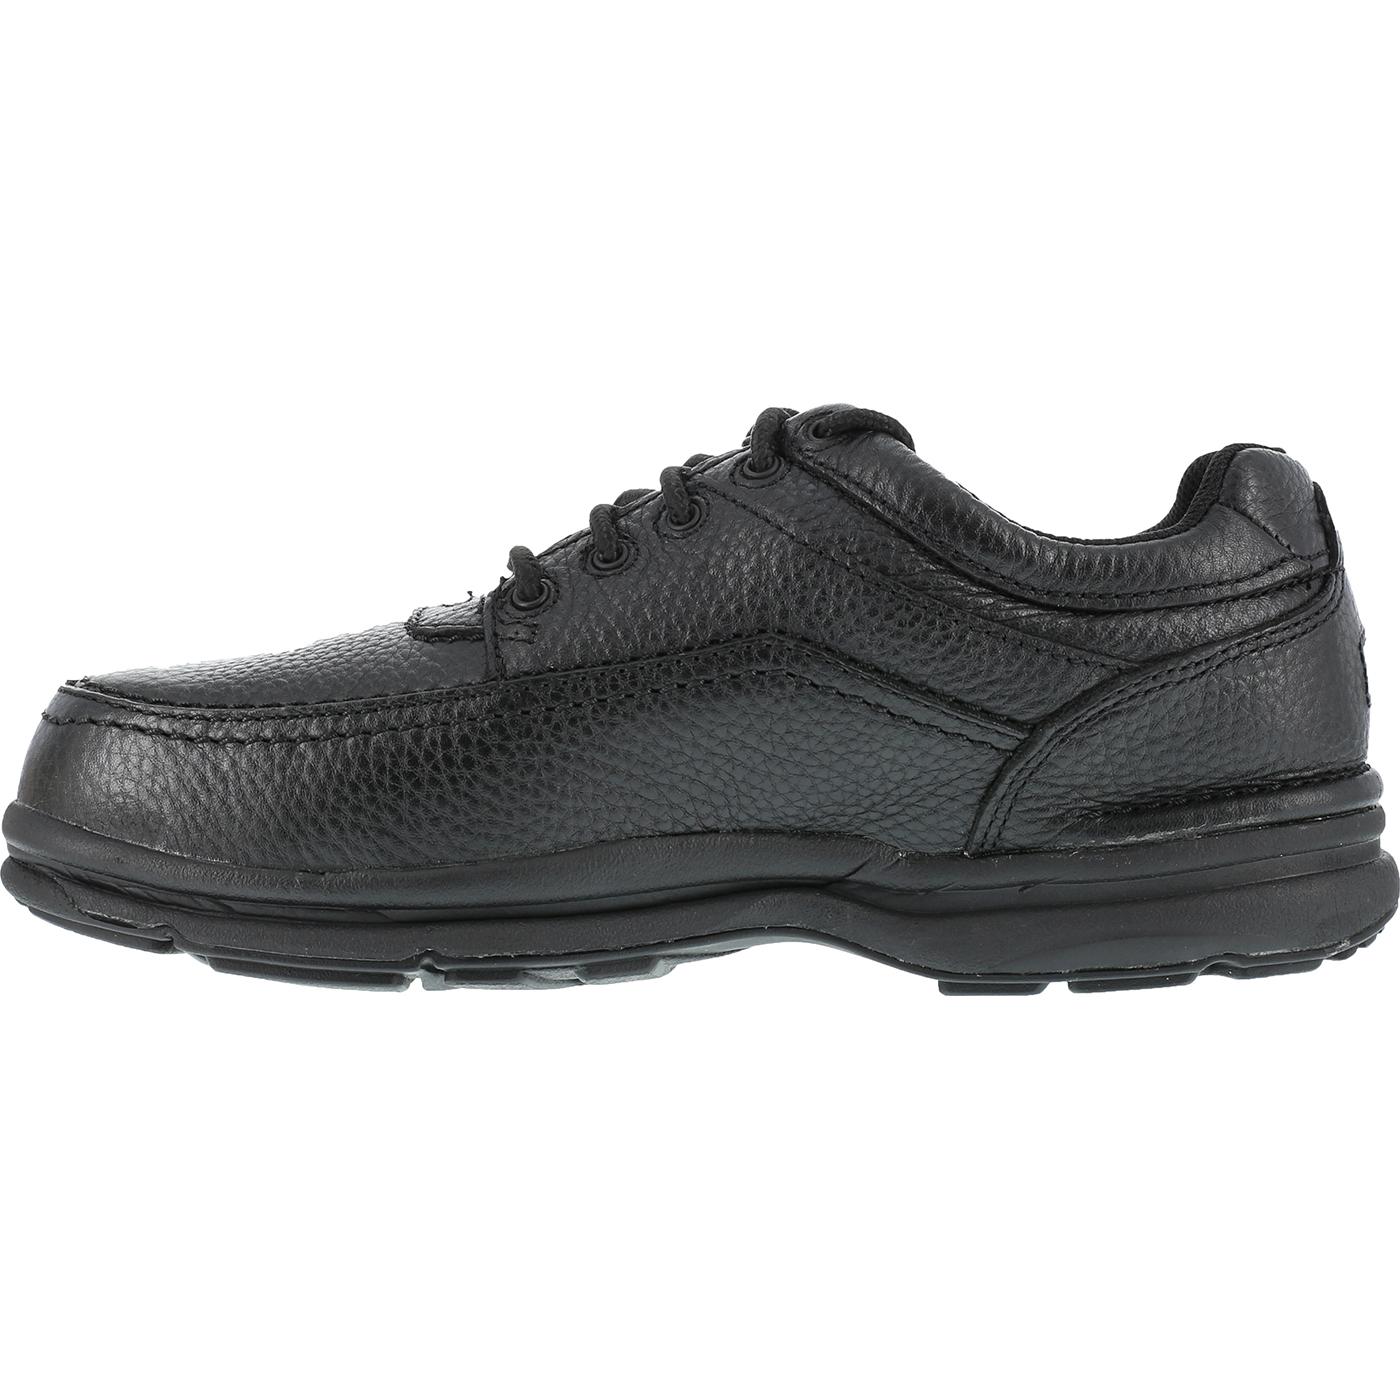 Rockport Black Steel Toe SD Casual Oxford work shoe, #RK6761